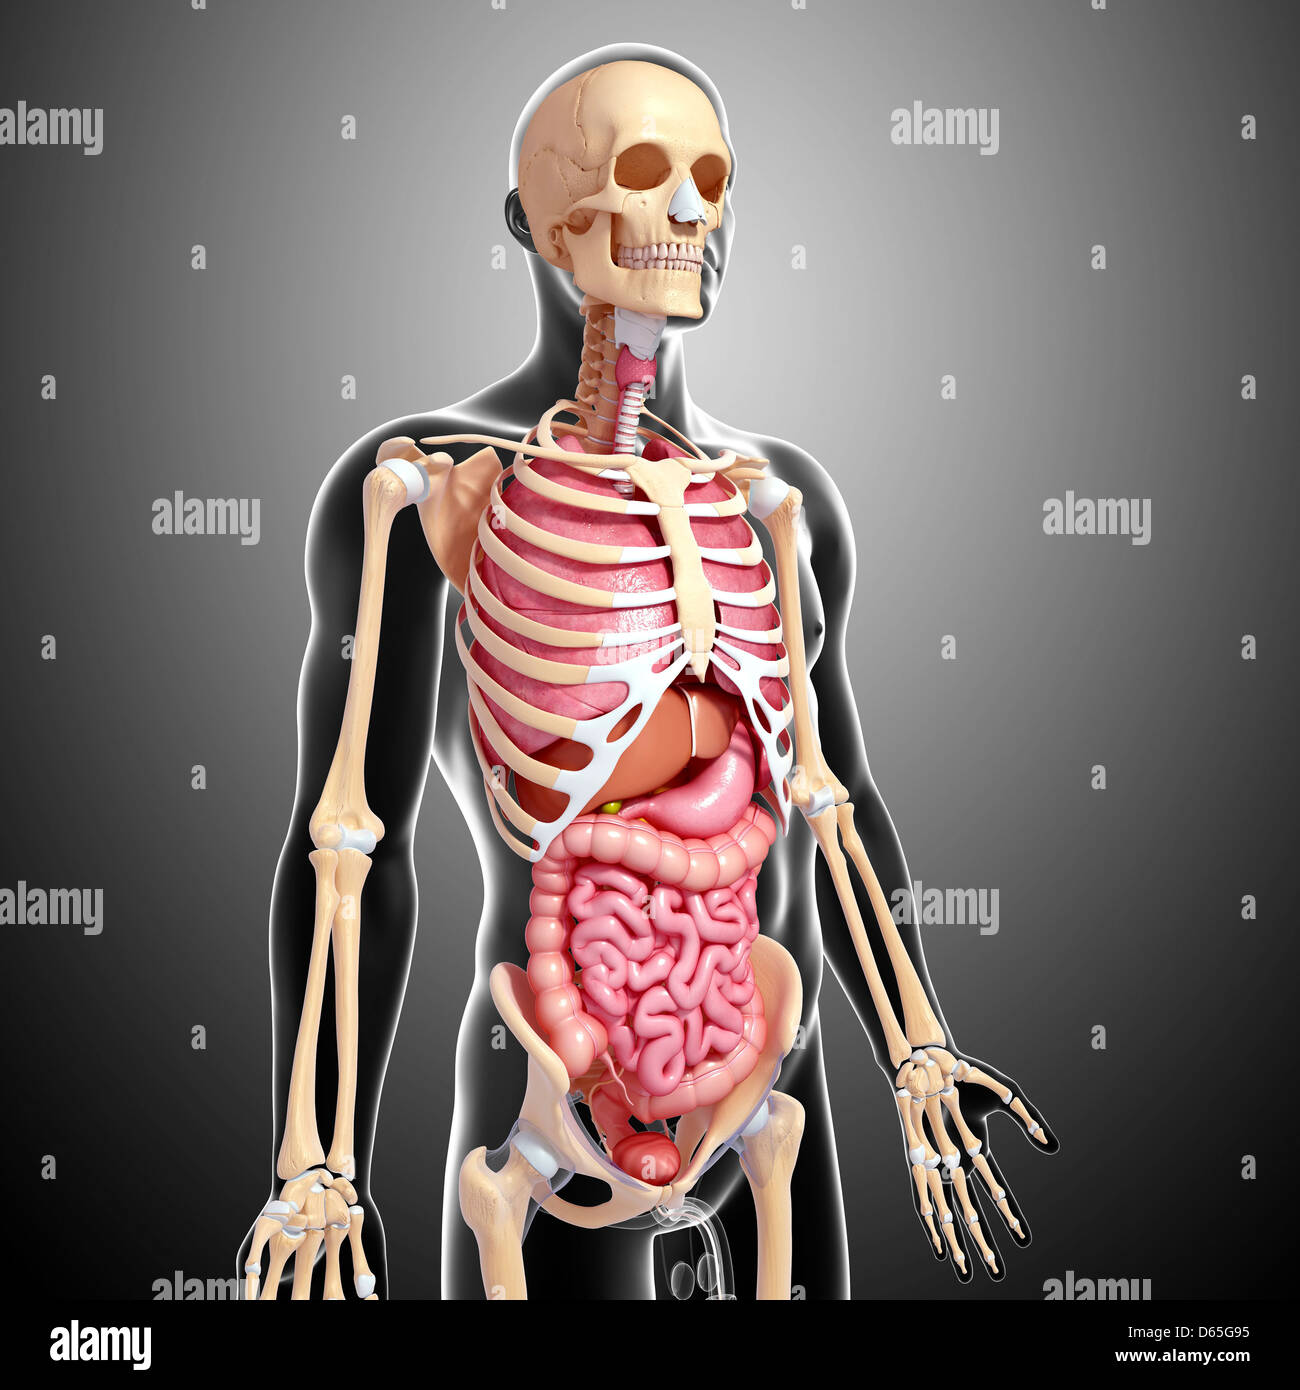 Male anatomy, artwork Stock Photo - Alamy